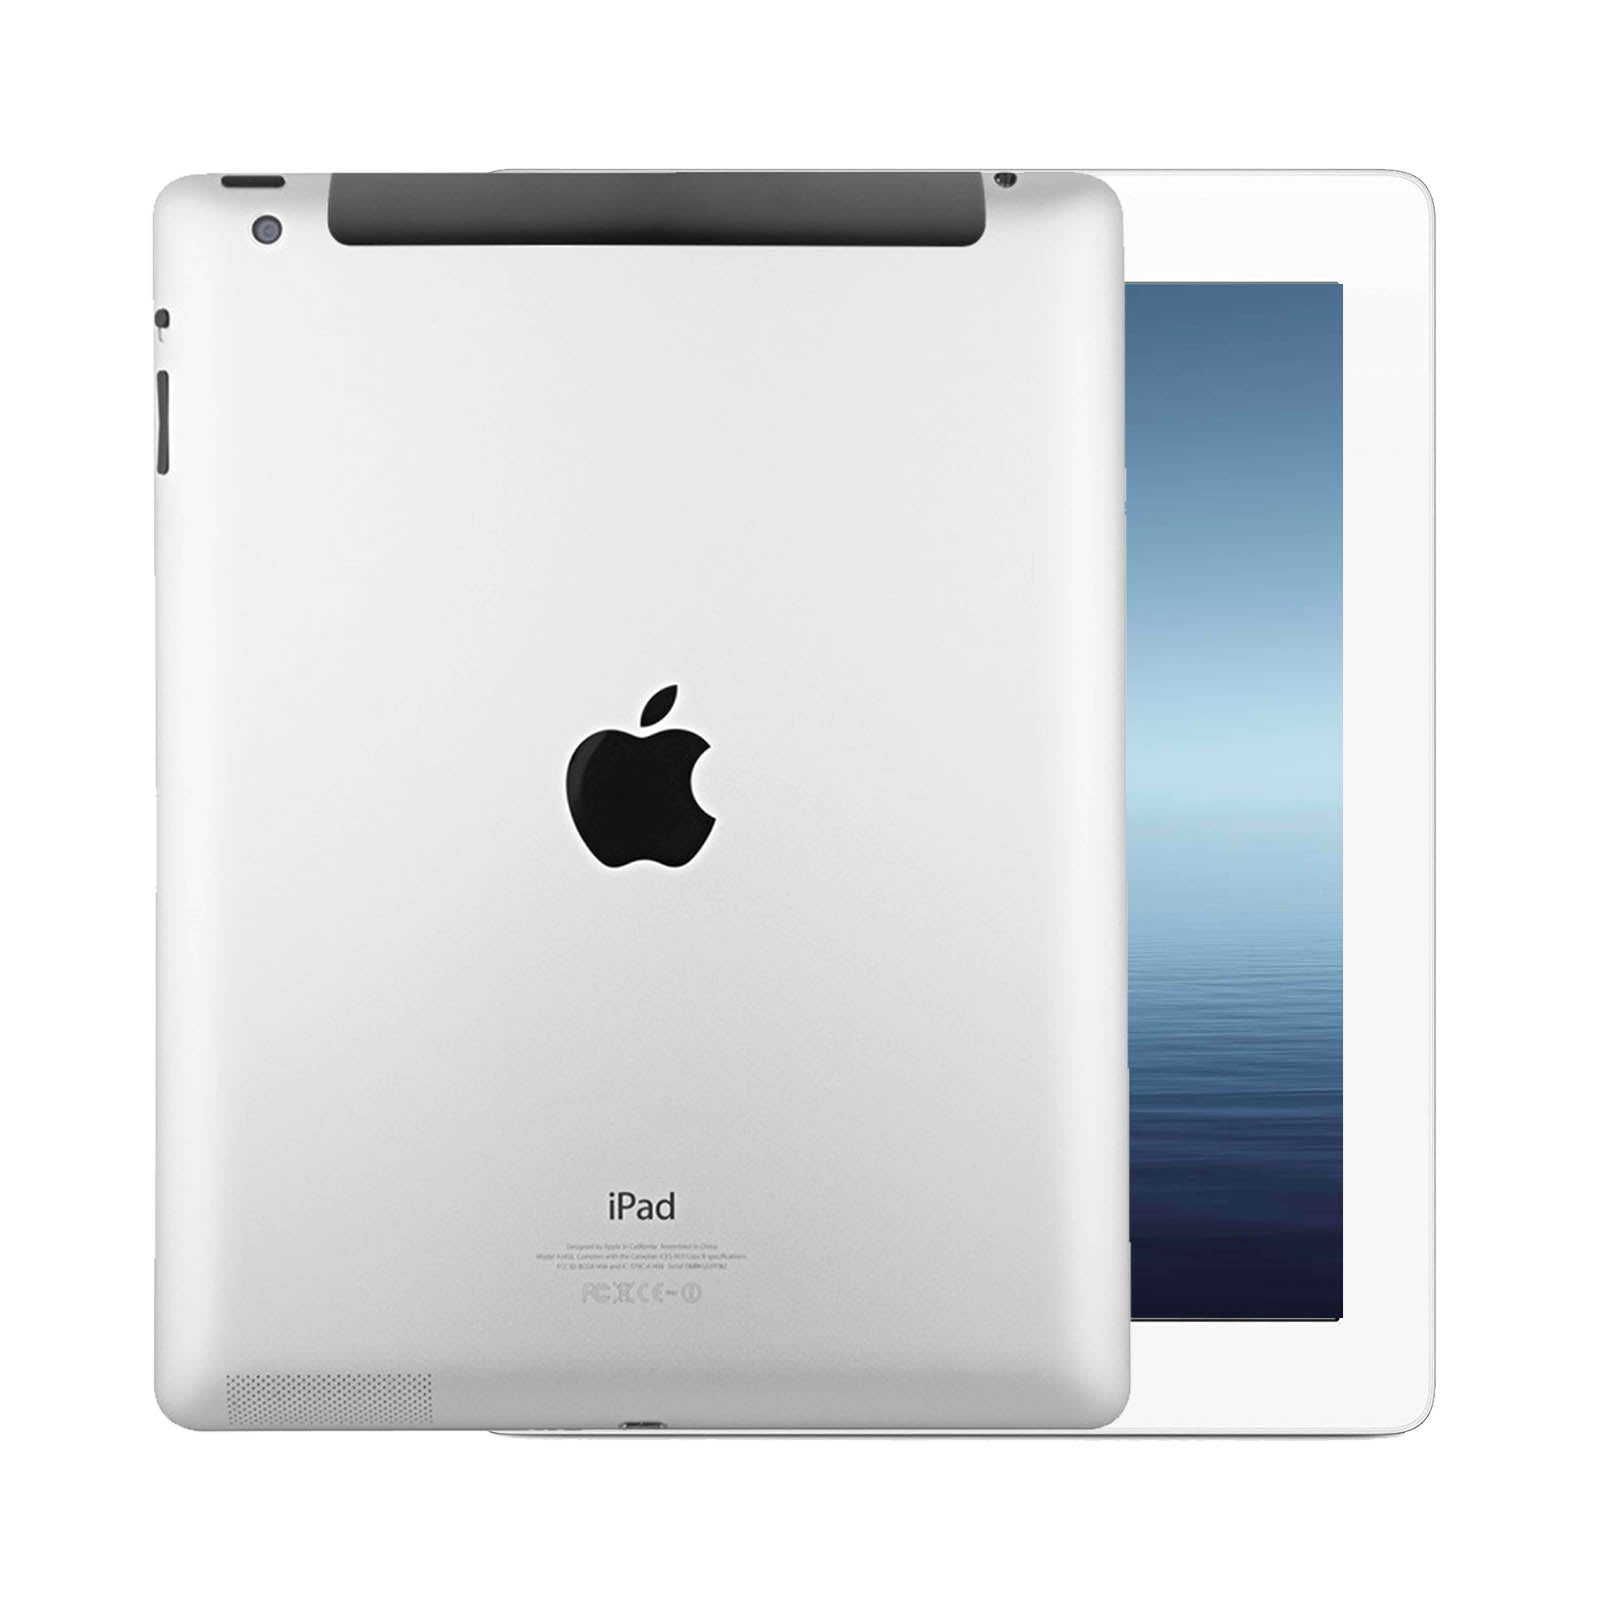 Apple iPad 3 64GB White Very Good - Unlocked